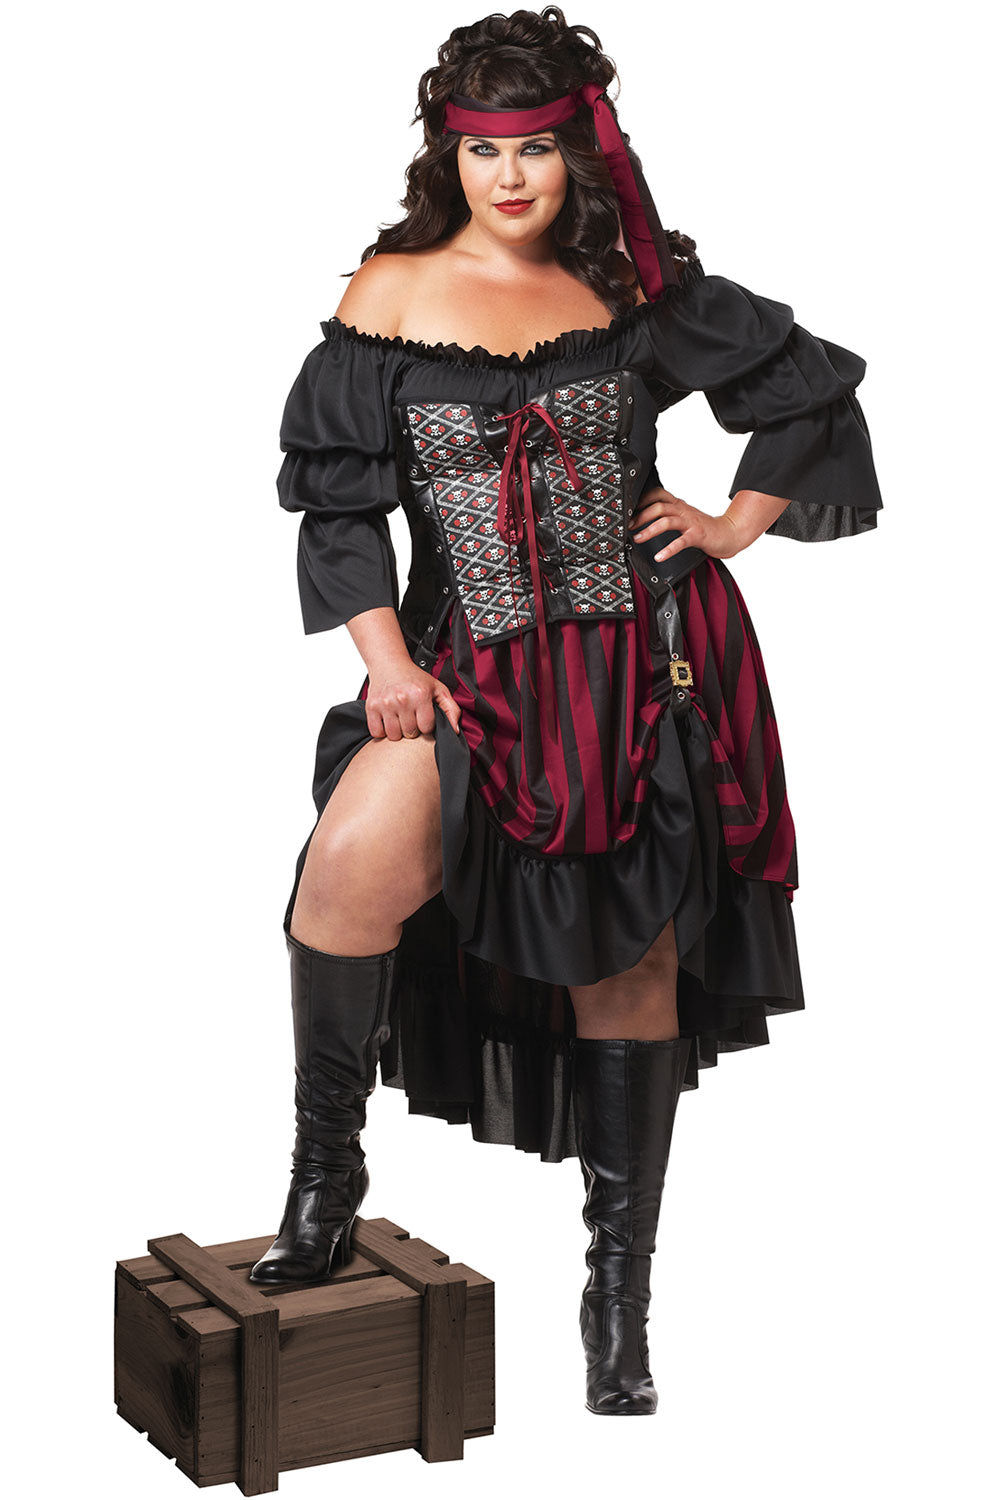 Pirate Wench Costume California Costume 01715